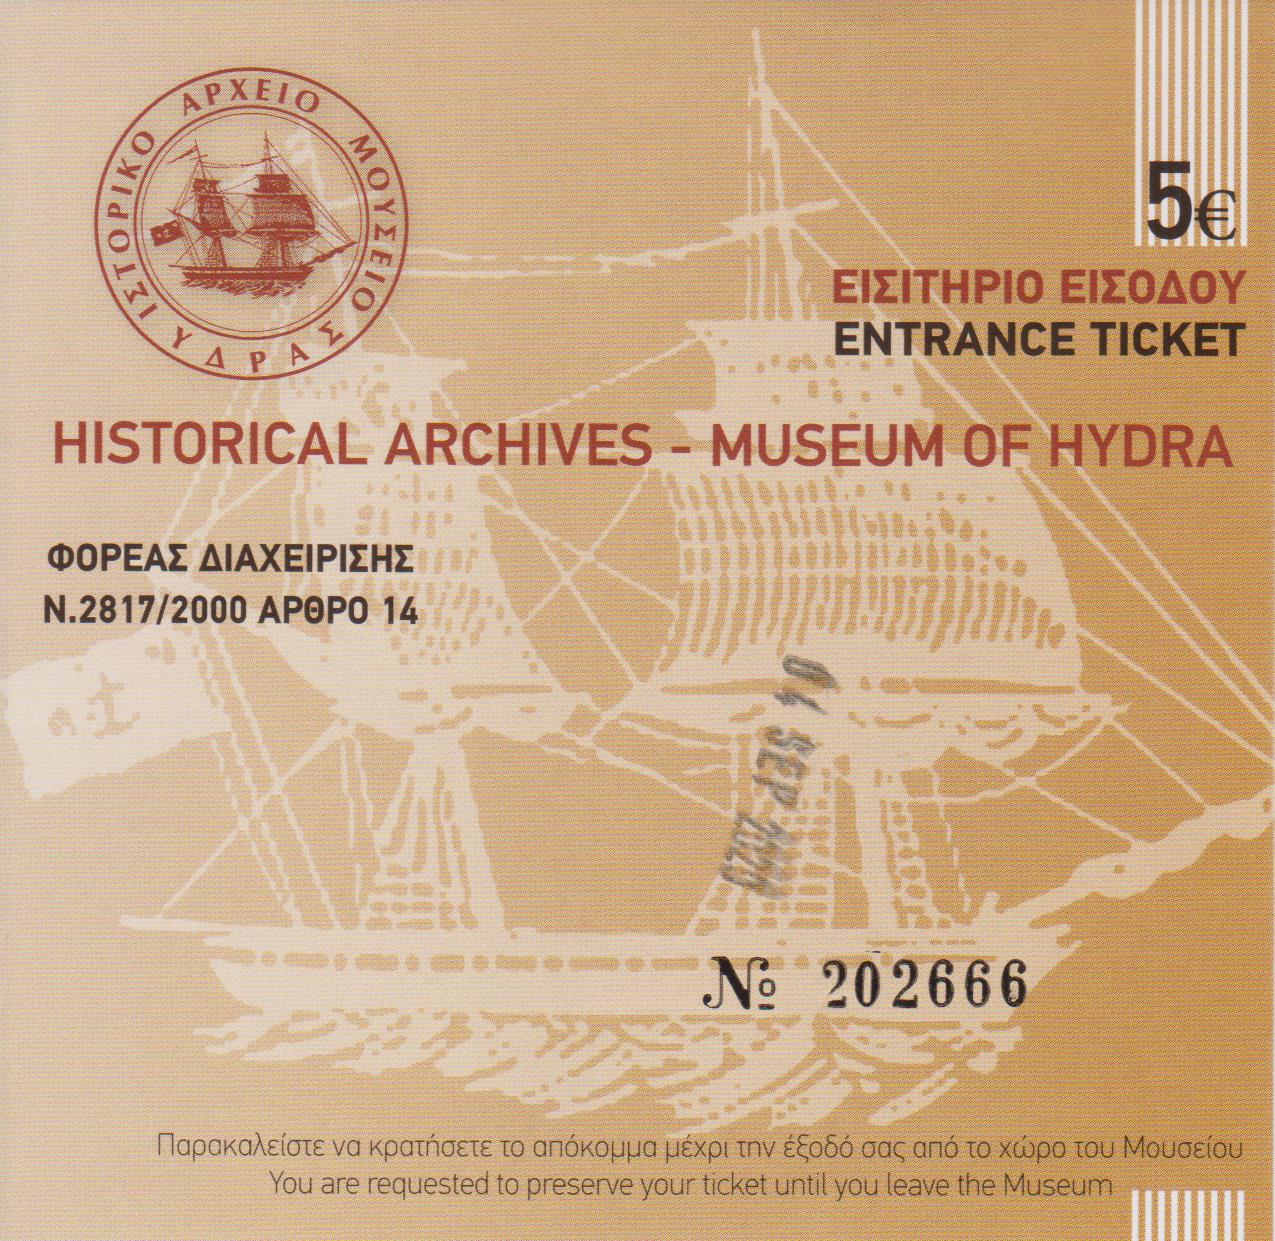 129) Museum of Hydra